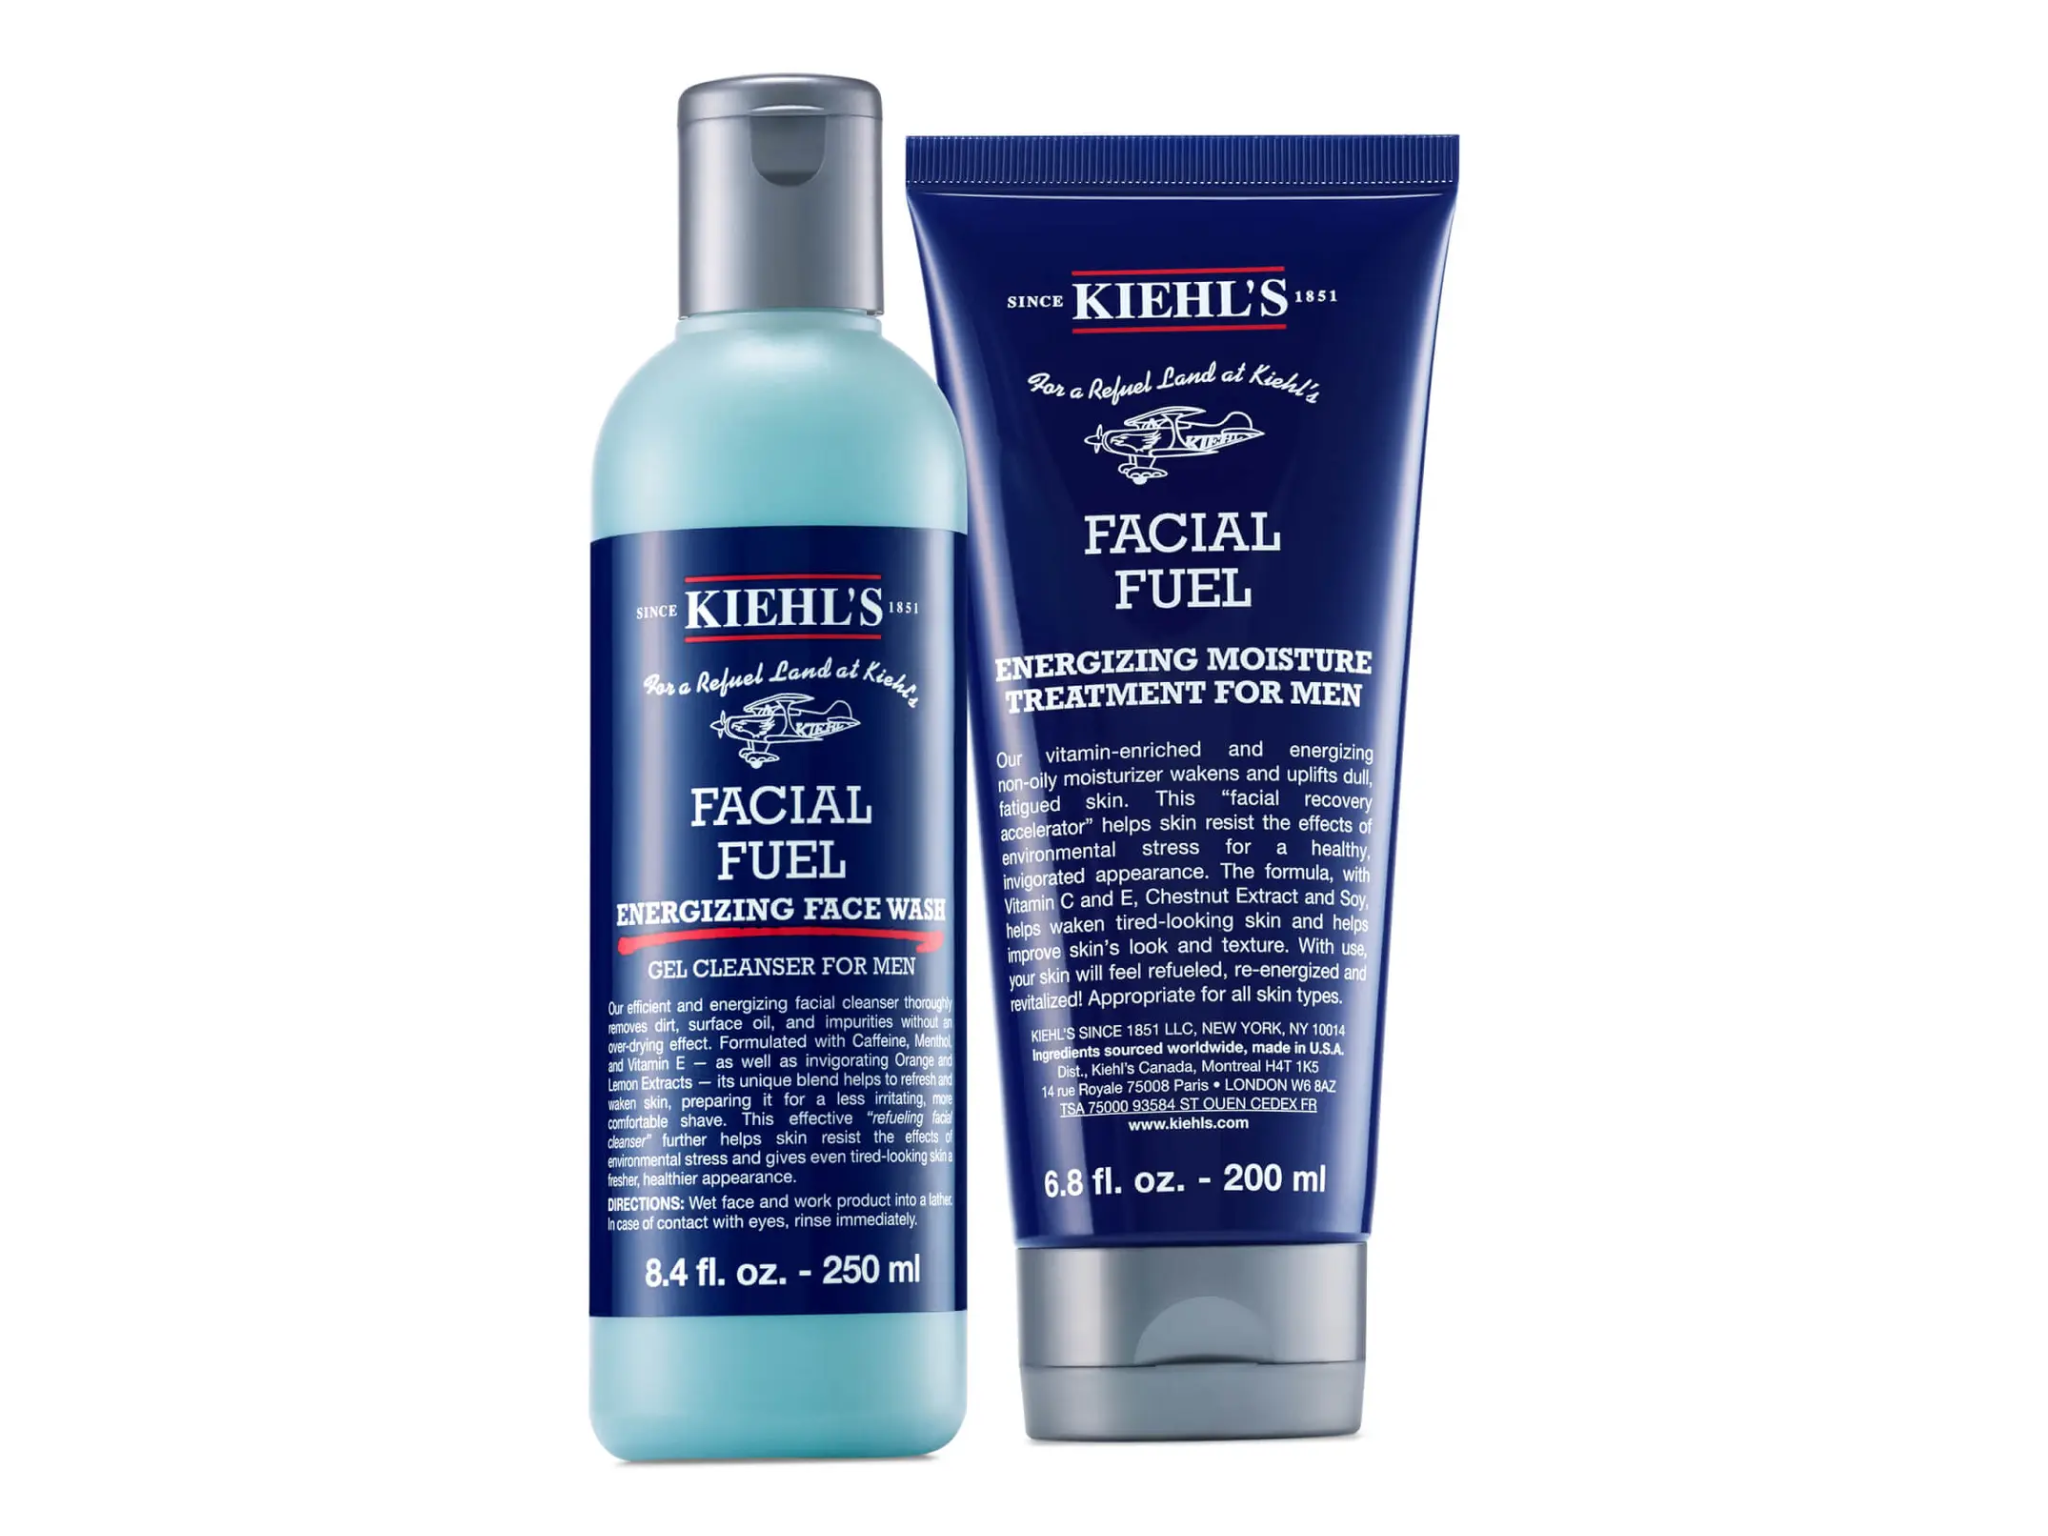 Kiehl’s facial fuel wash and moisturiser